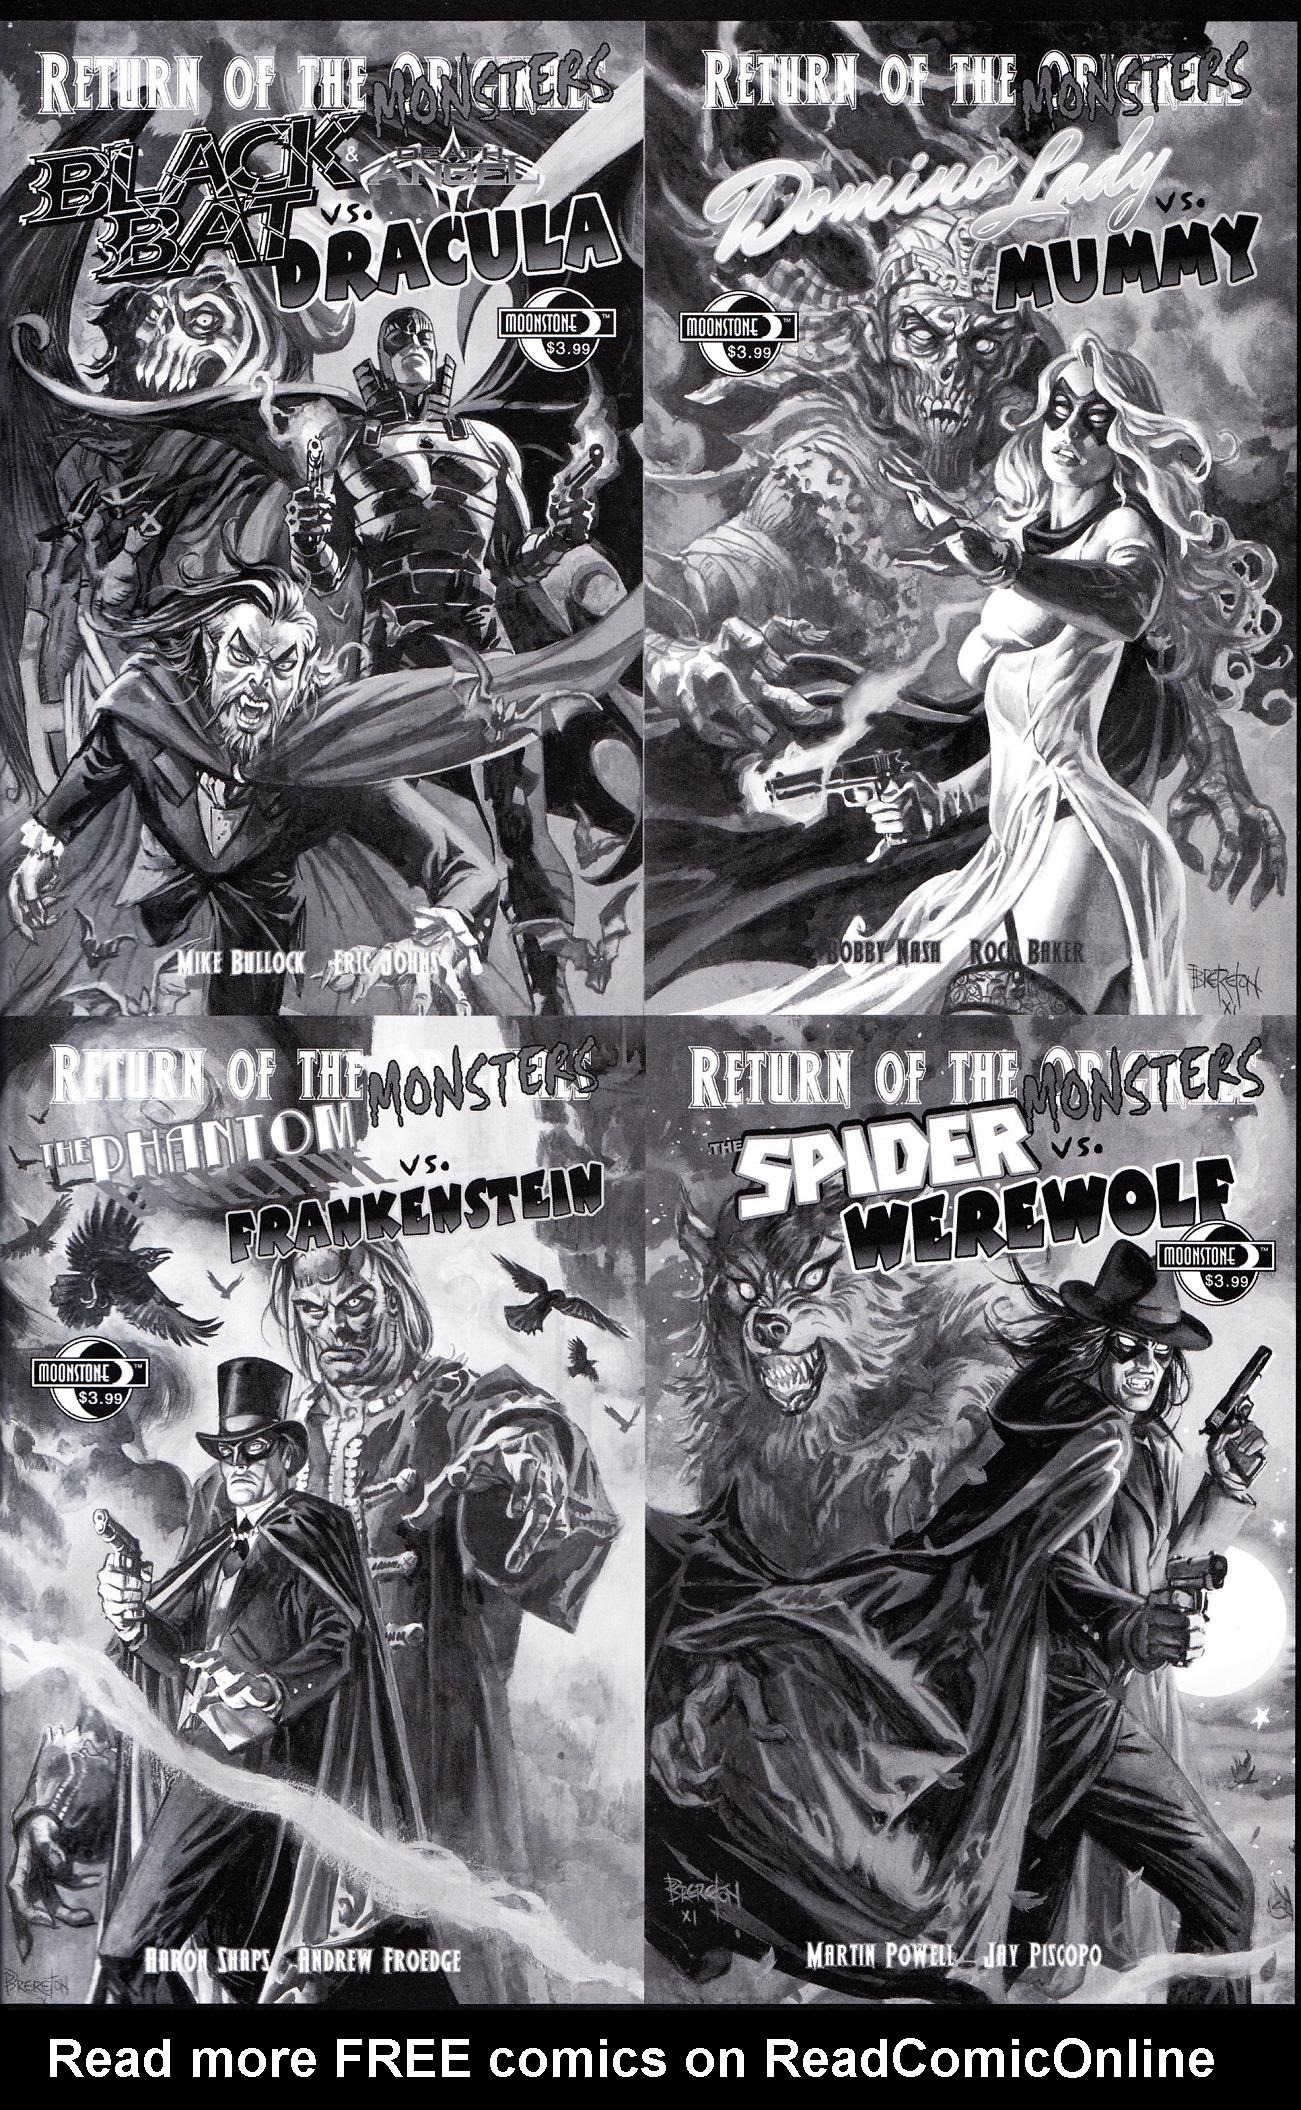 Read online Return of the Monsters: Black Bat & Death Angel vs Dracula comic -  Issue # Full - 39